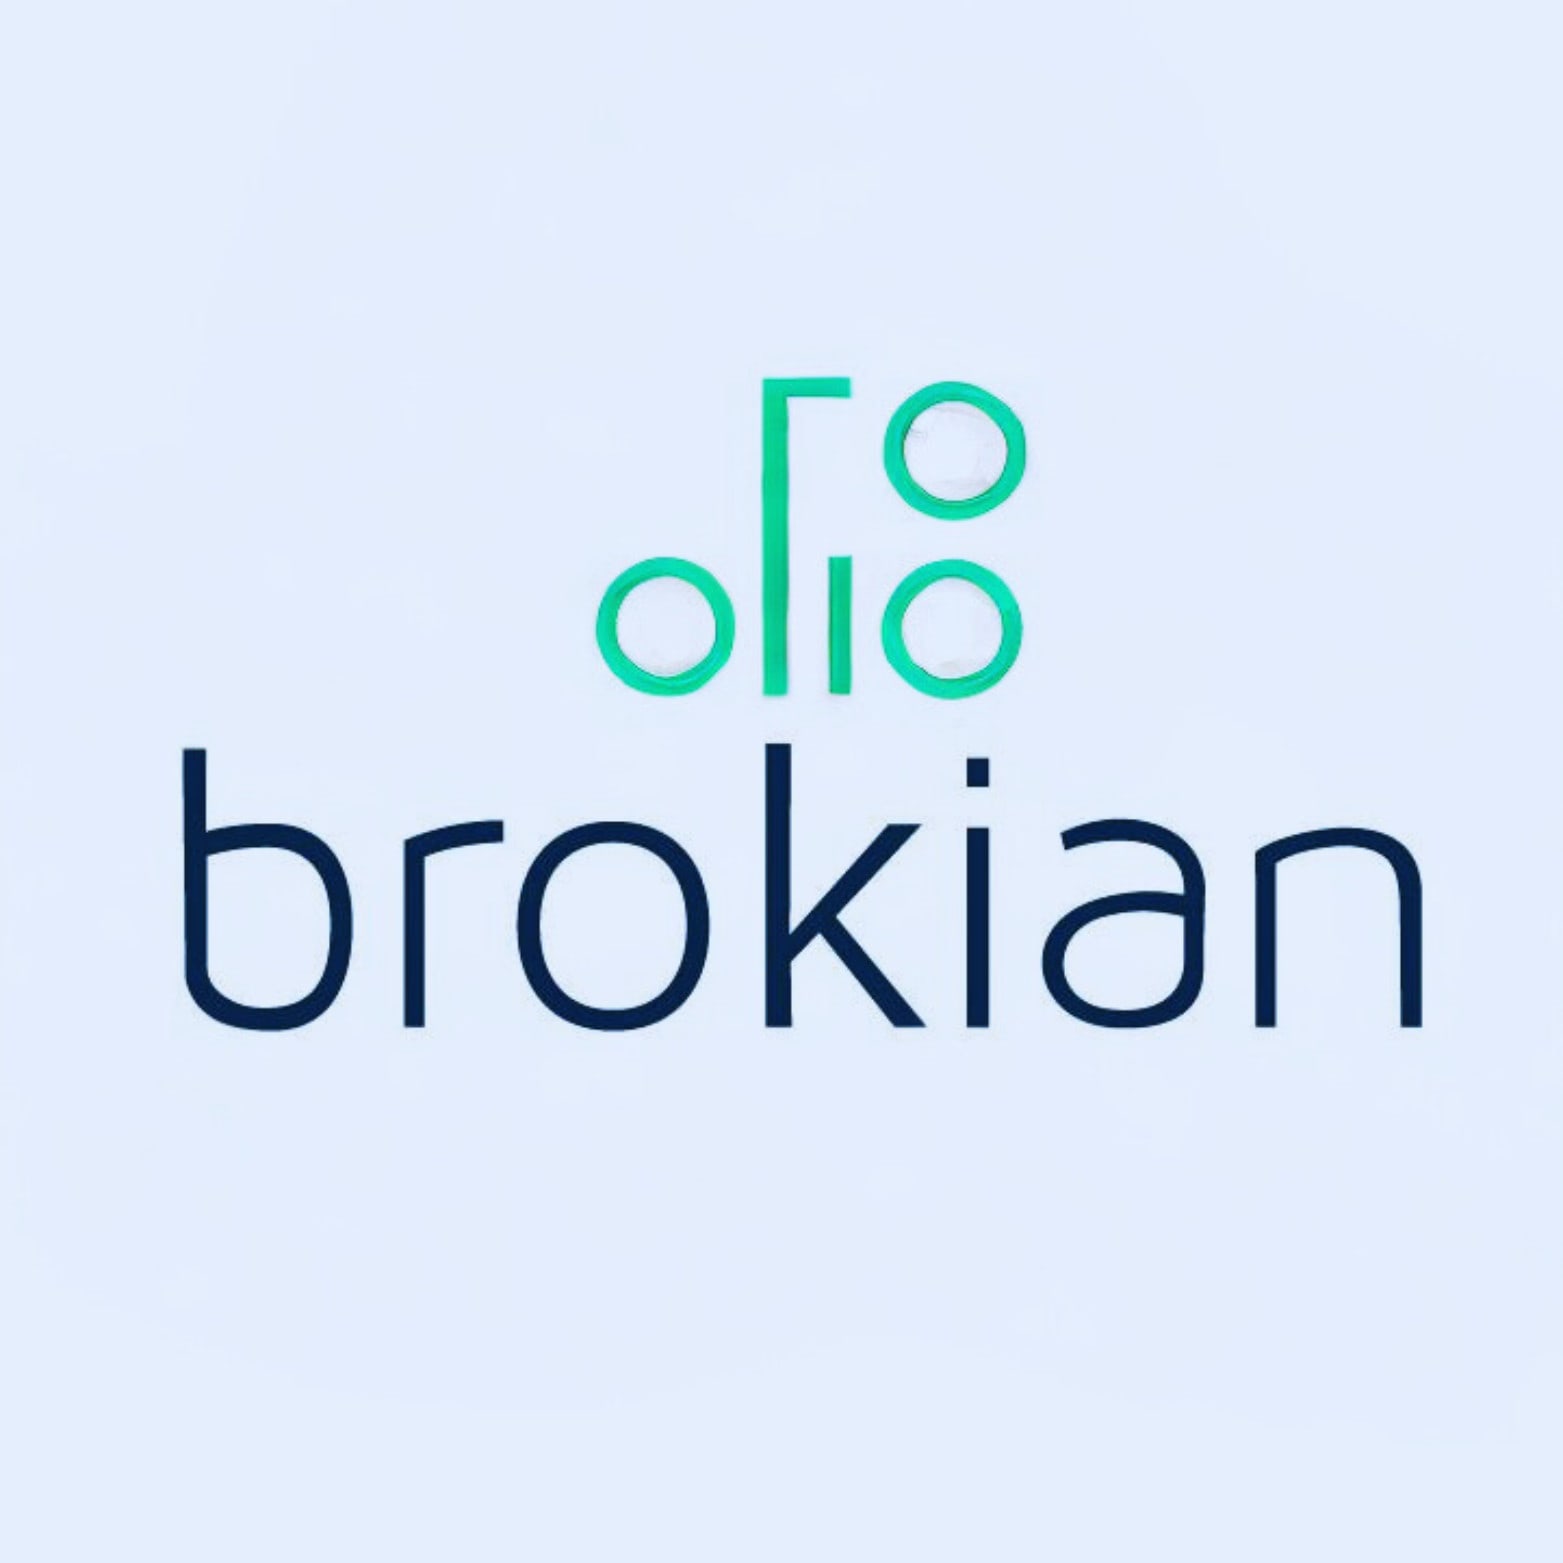 Brokian Branding and Visual Identity